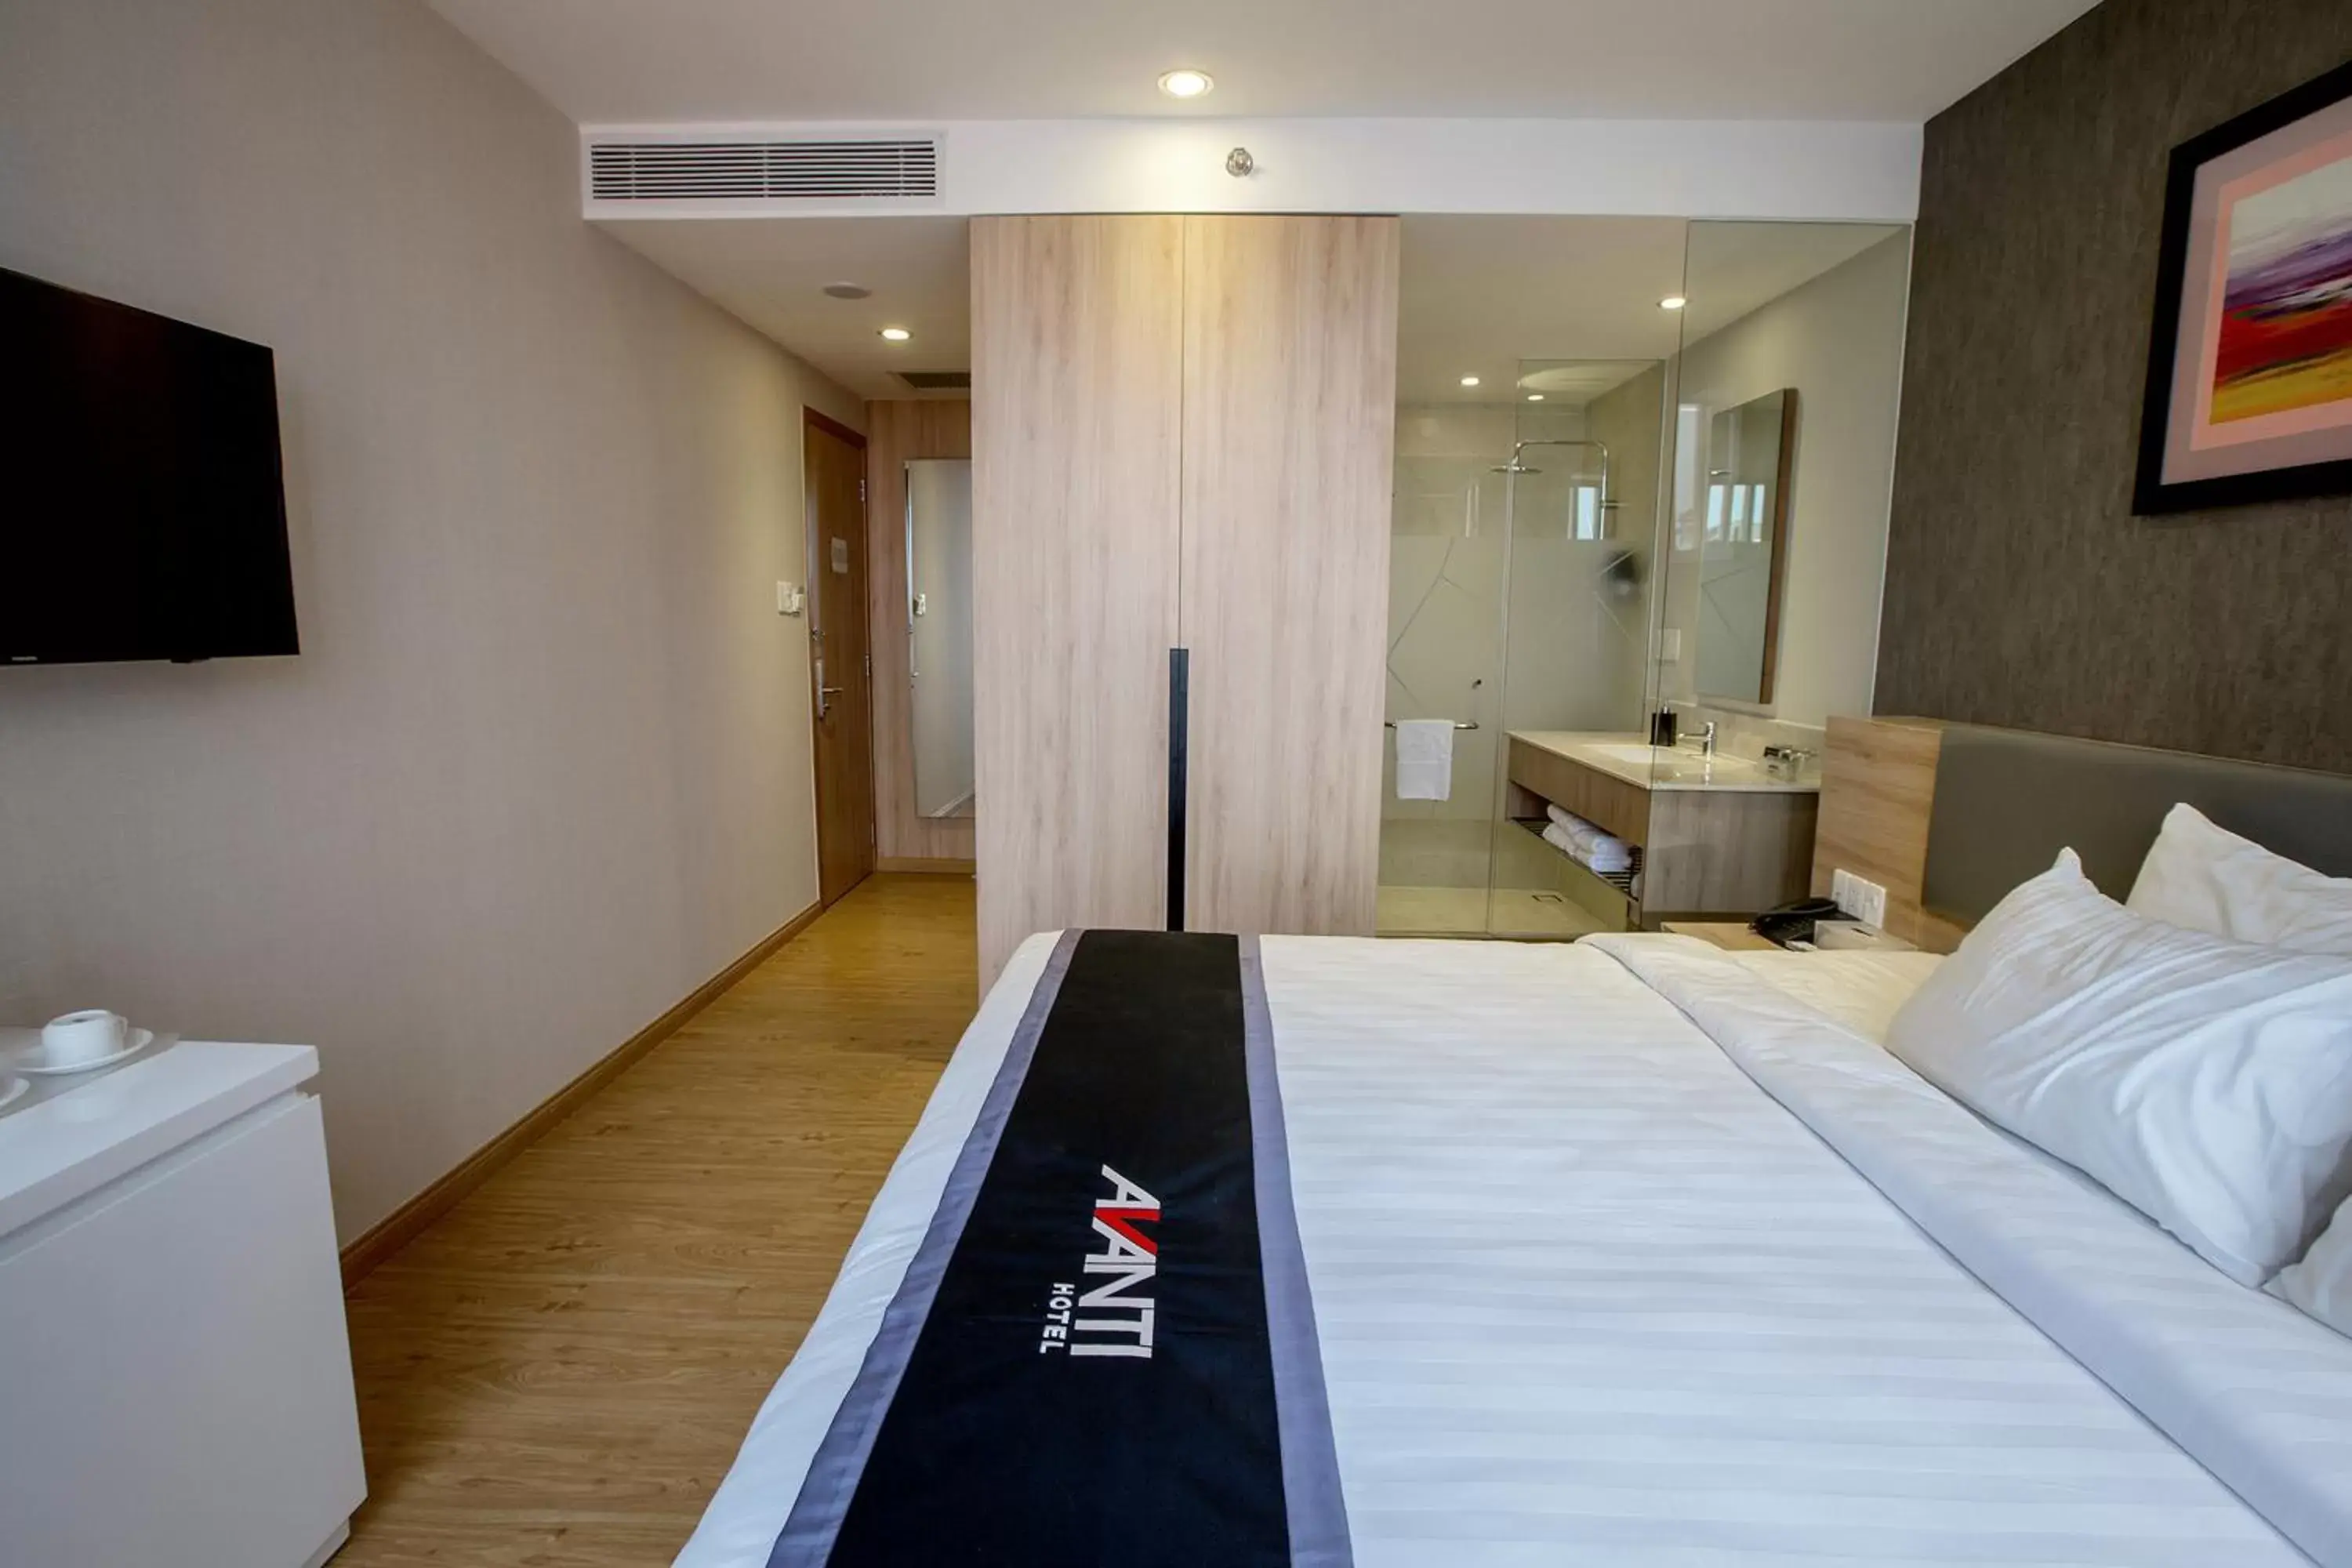 Bed, Room Photo in Avanti Hotel